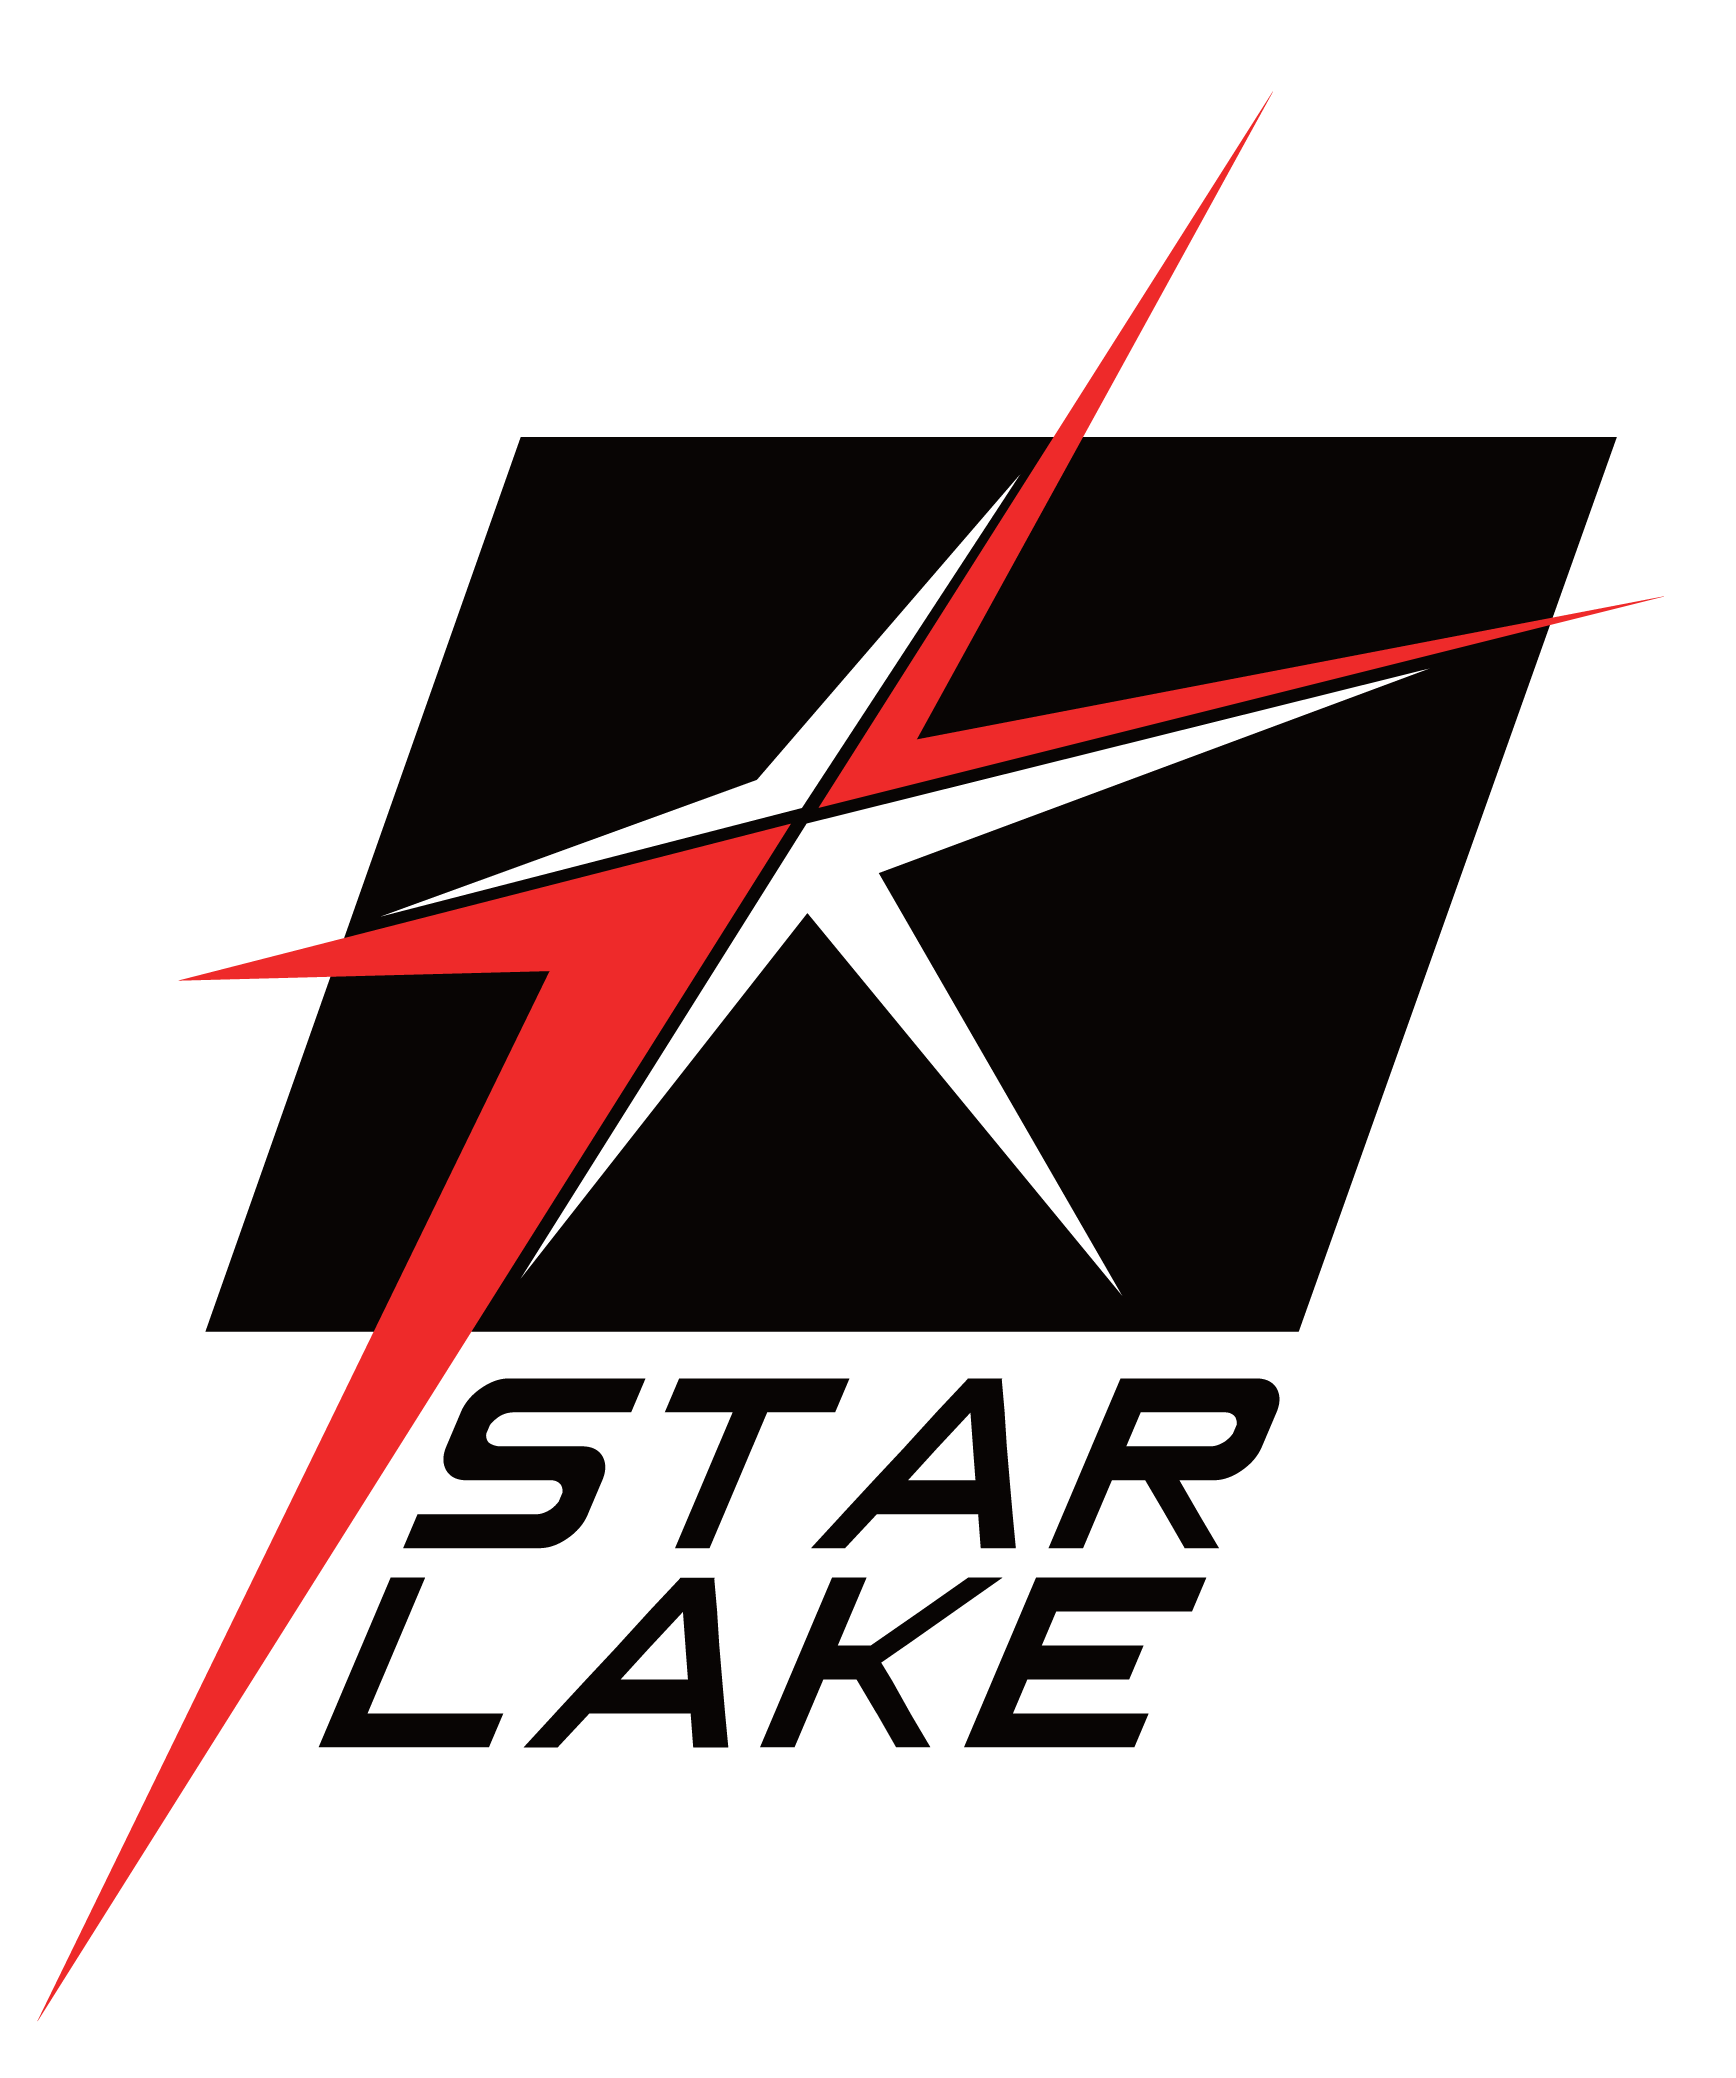 7Starlake logo